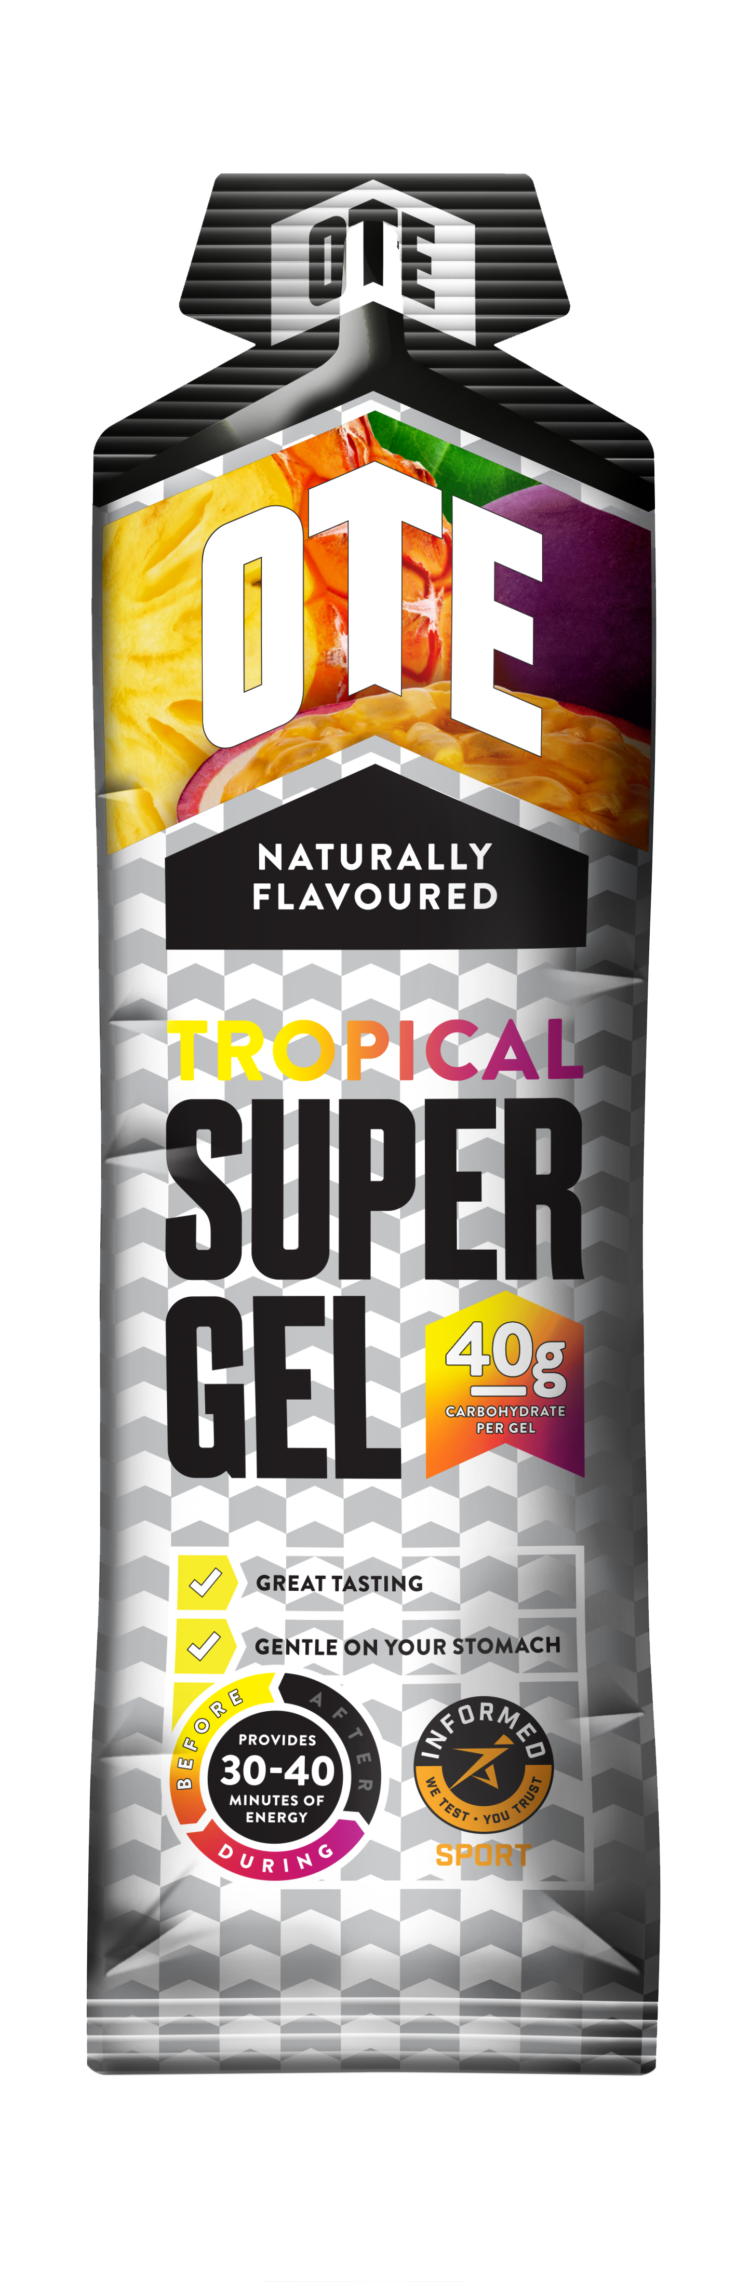 Tropical Super Gel